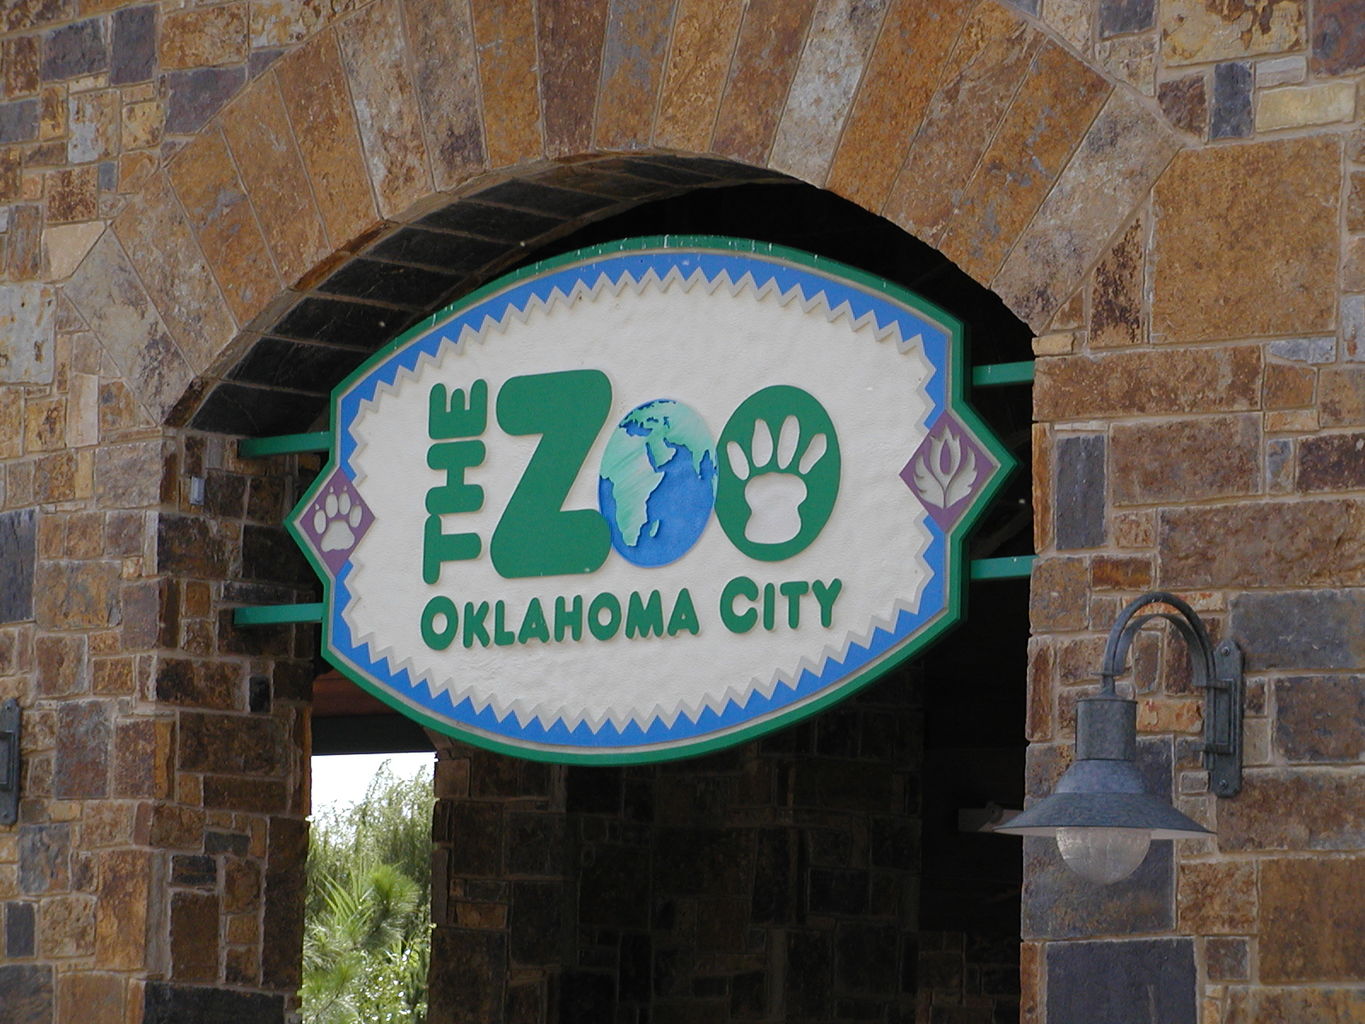 Trip to the OKC Zoo
